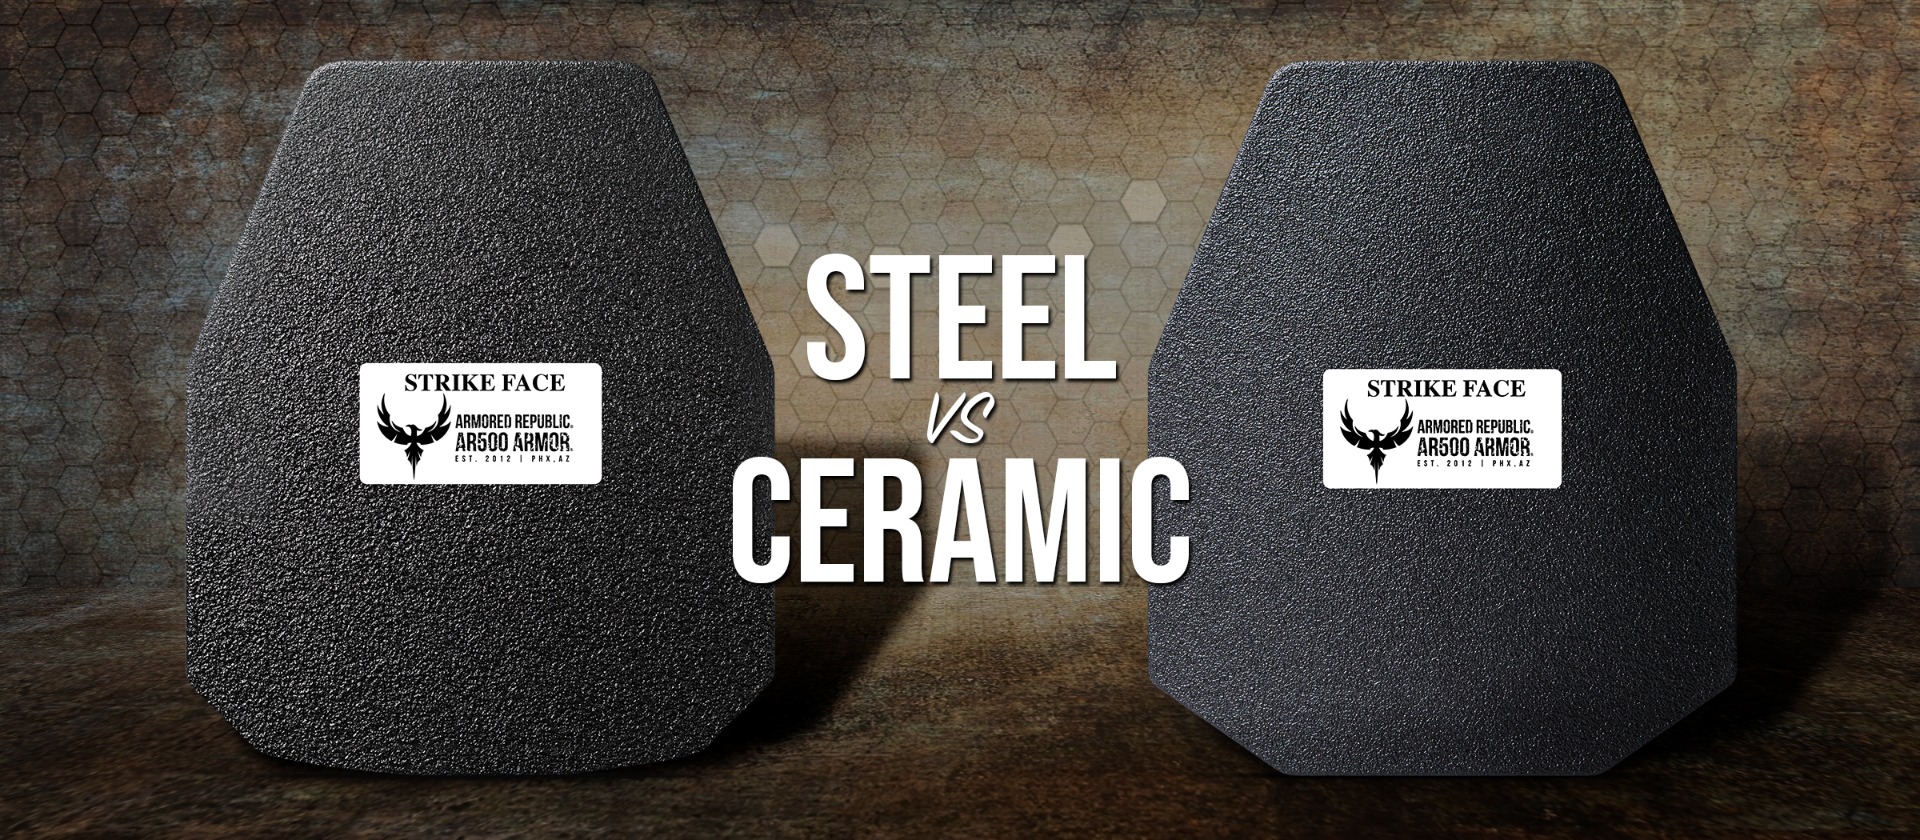 Steel vs Ceramic Body Armor from Armored Republic